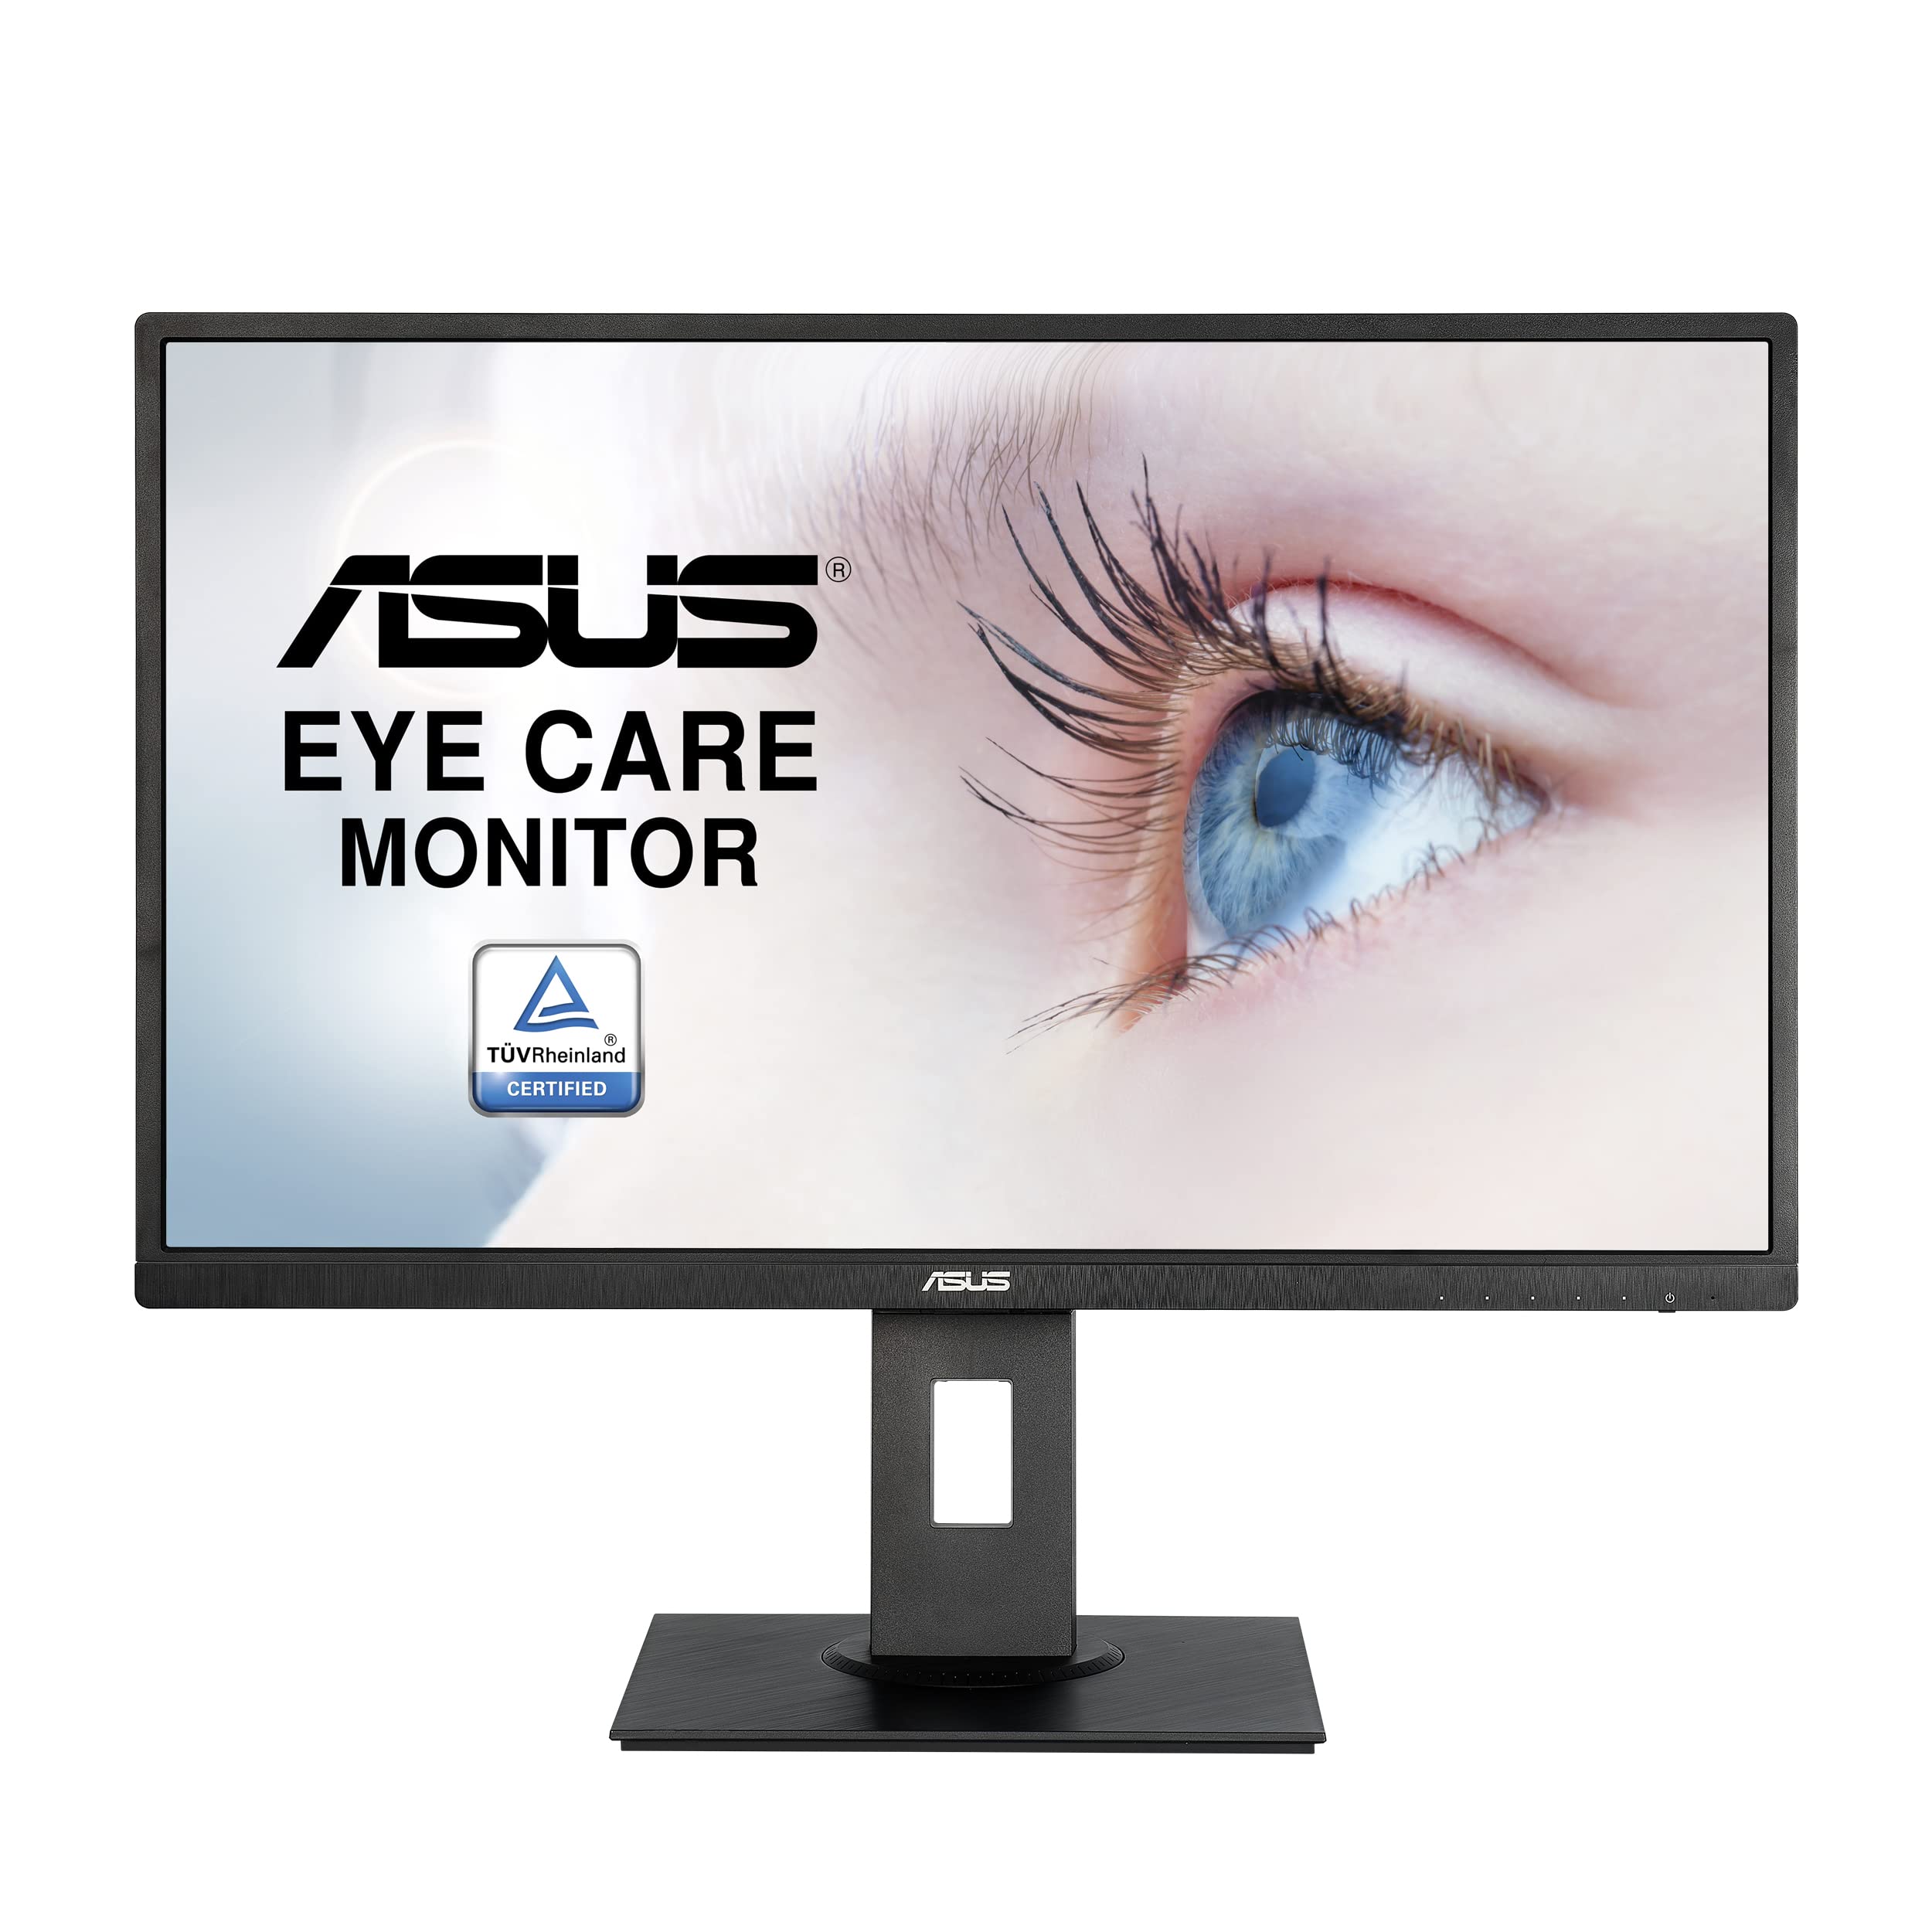 Asus 27” 1080P Monitor (VA279HAL) - Full HD, Built-in Speakers, Eye Care, Low Blue Light, Flicker Free, VESA Mountable, Height Adjustment, Pivot, Swivel, Tilt, HDMI, VGA